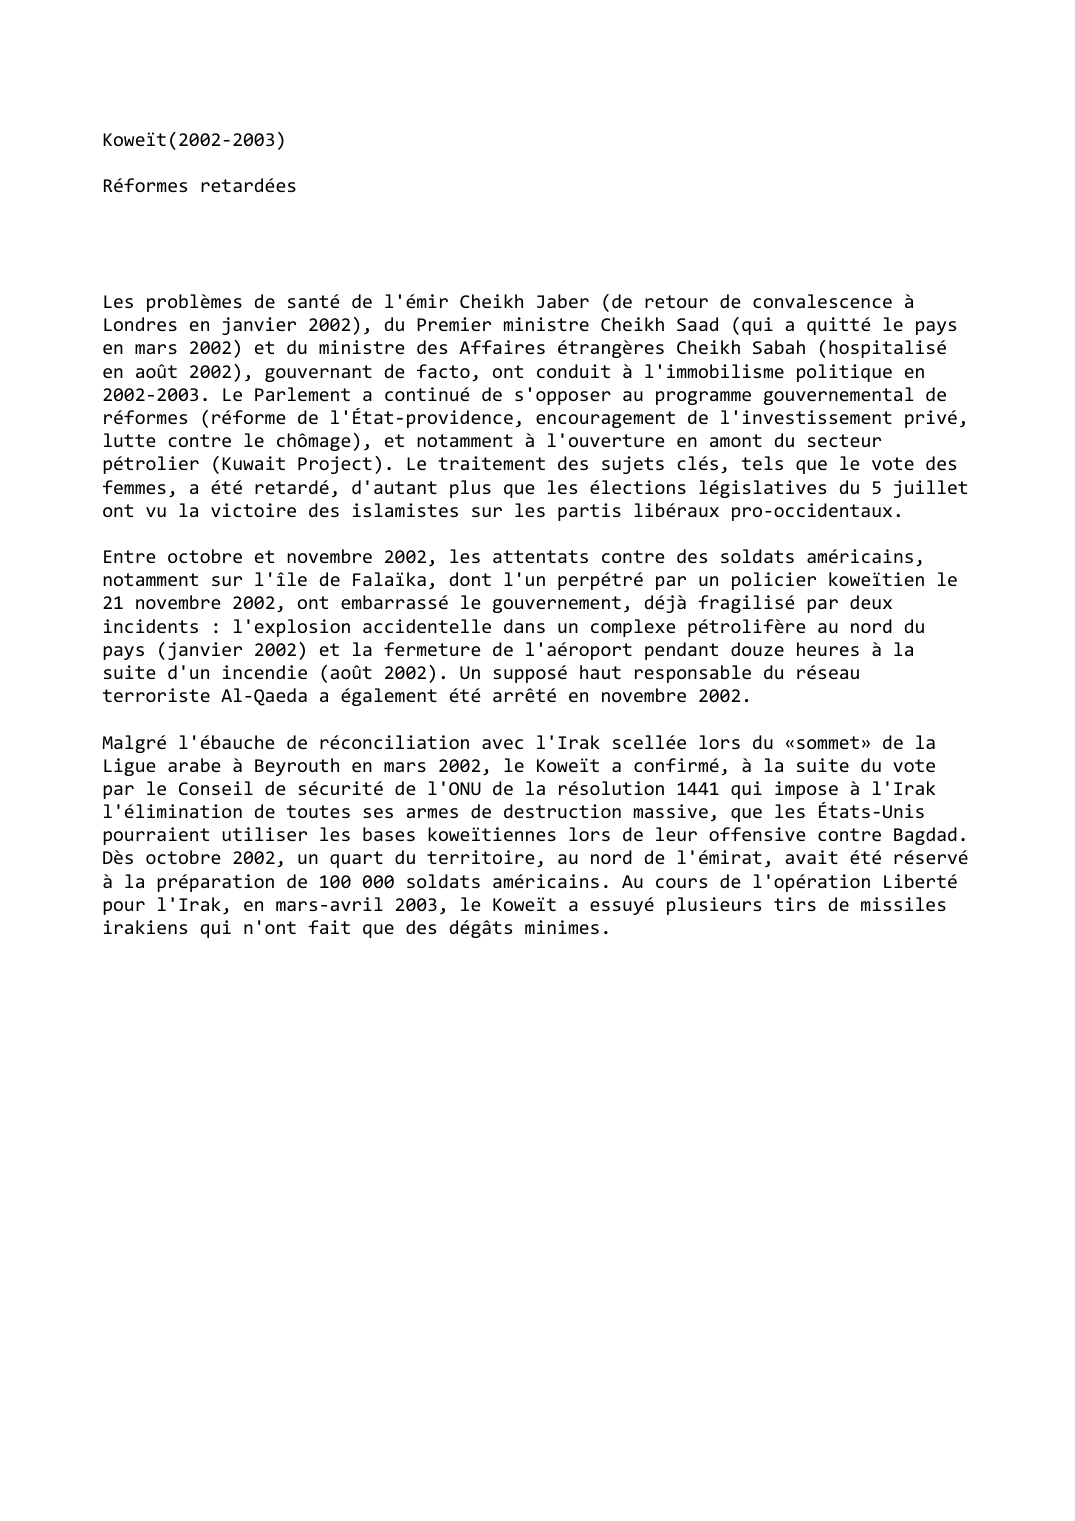 Prévisualisation du document Koweït(2002-2003): Réformes retardées